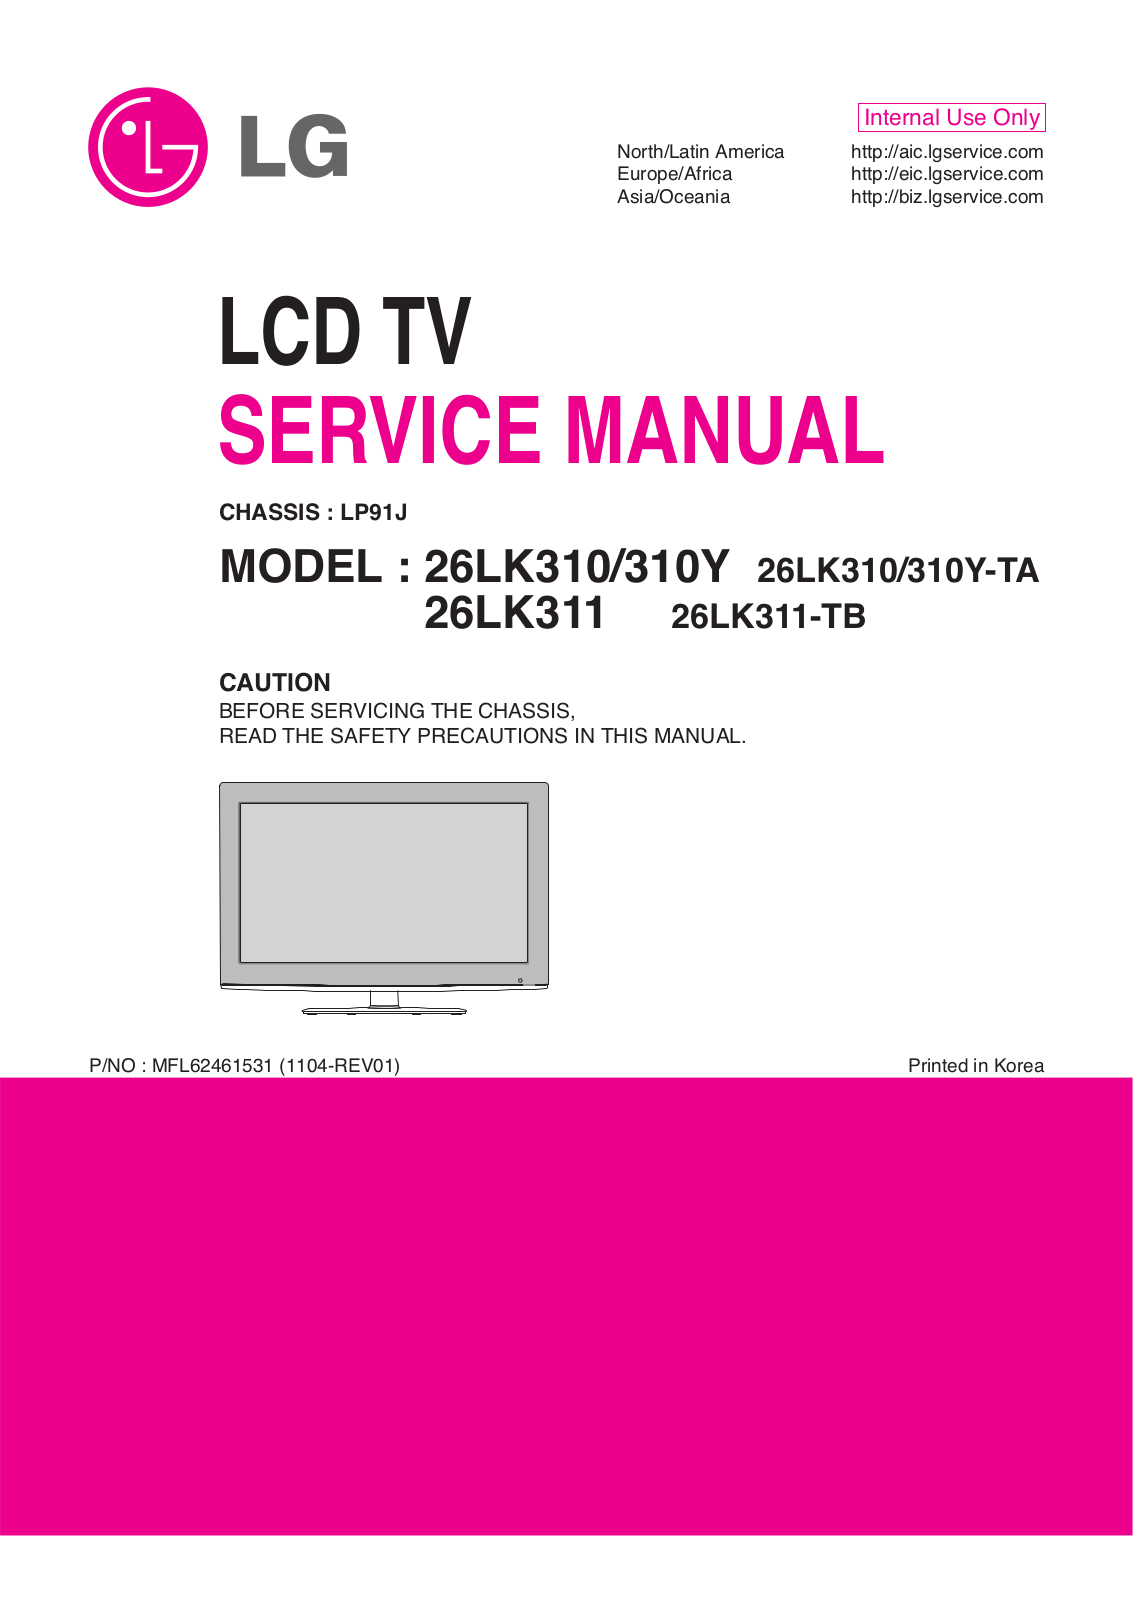 LG 26LK310, 26LK310Y, 26LK310-TA, 26LK3310Y-TA, 26LK311 Service Manual